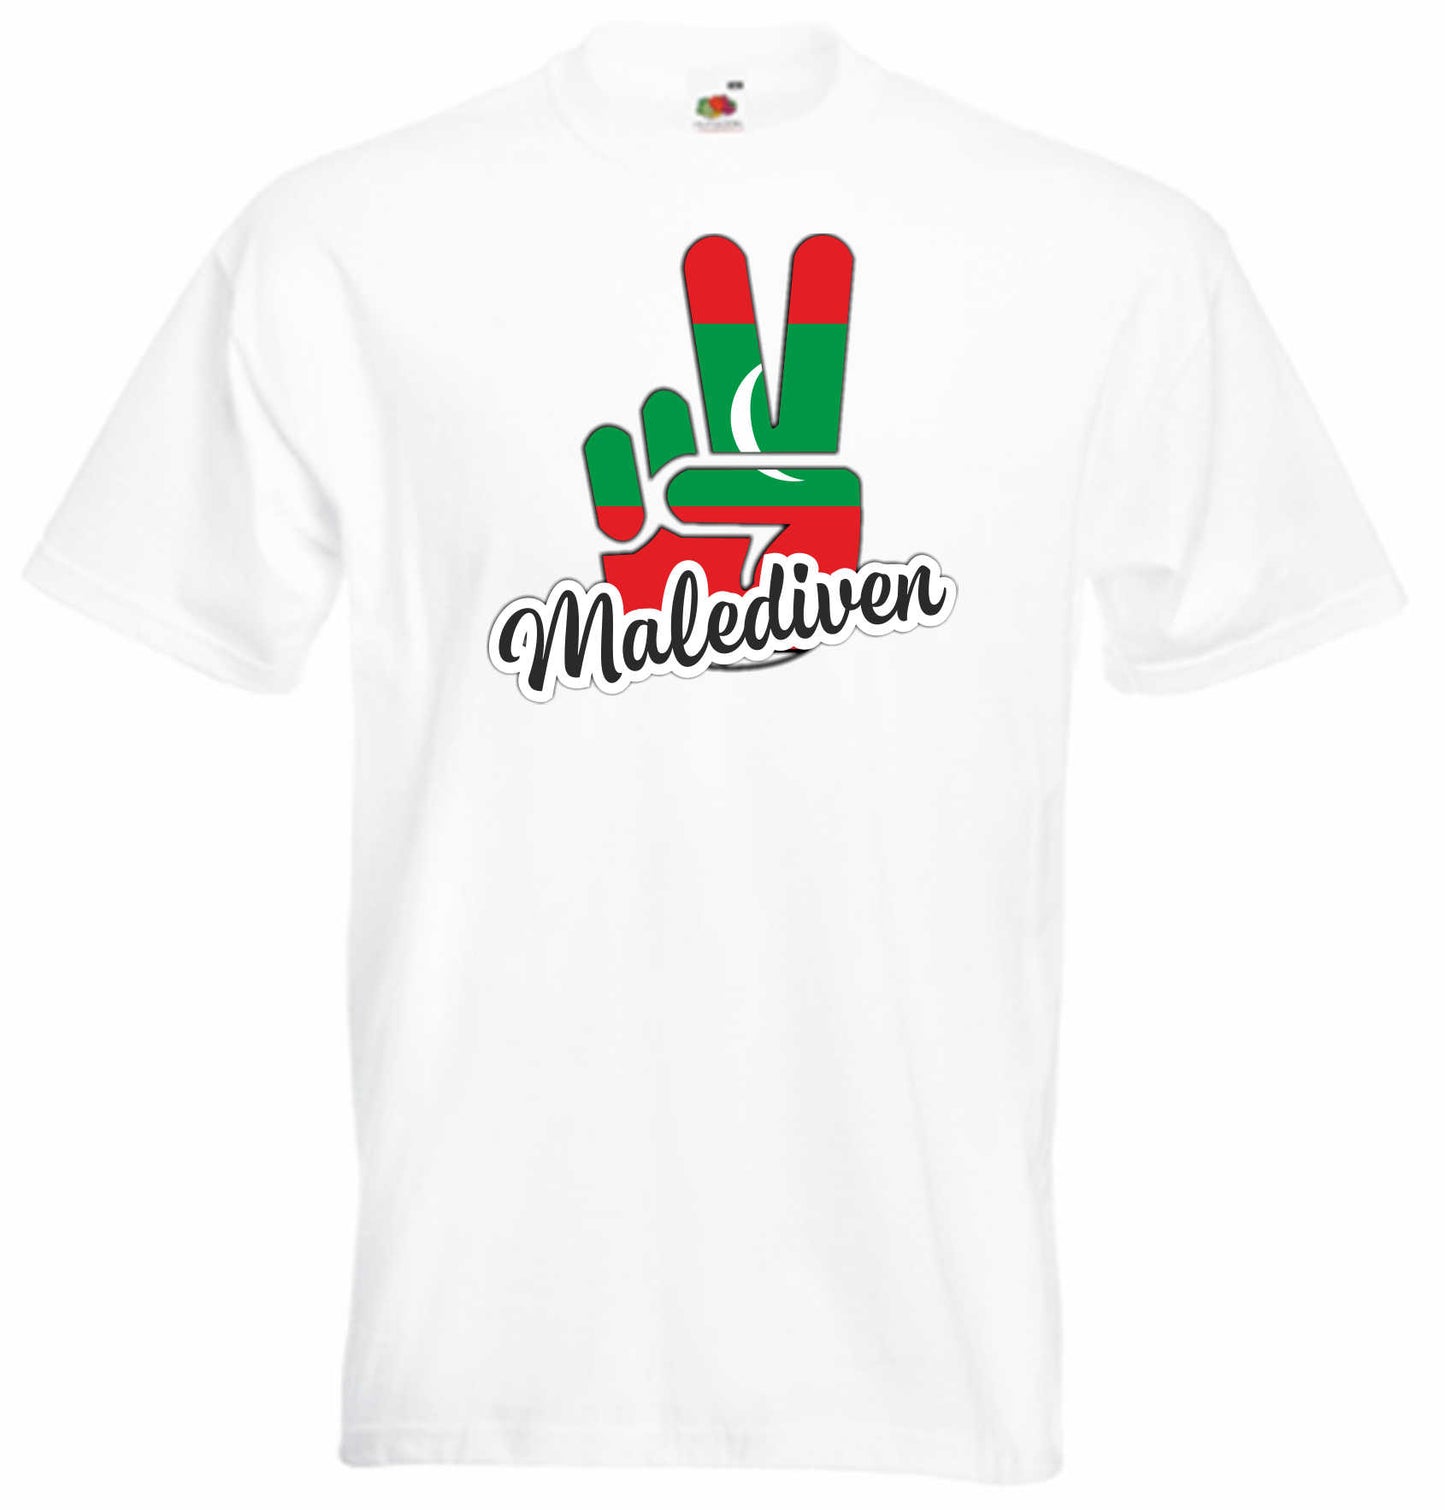 T-Shirt Herren - Victory - Flagge / Fahne - Malediven - Sieg